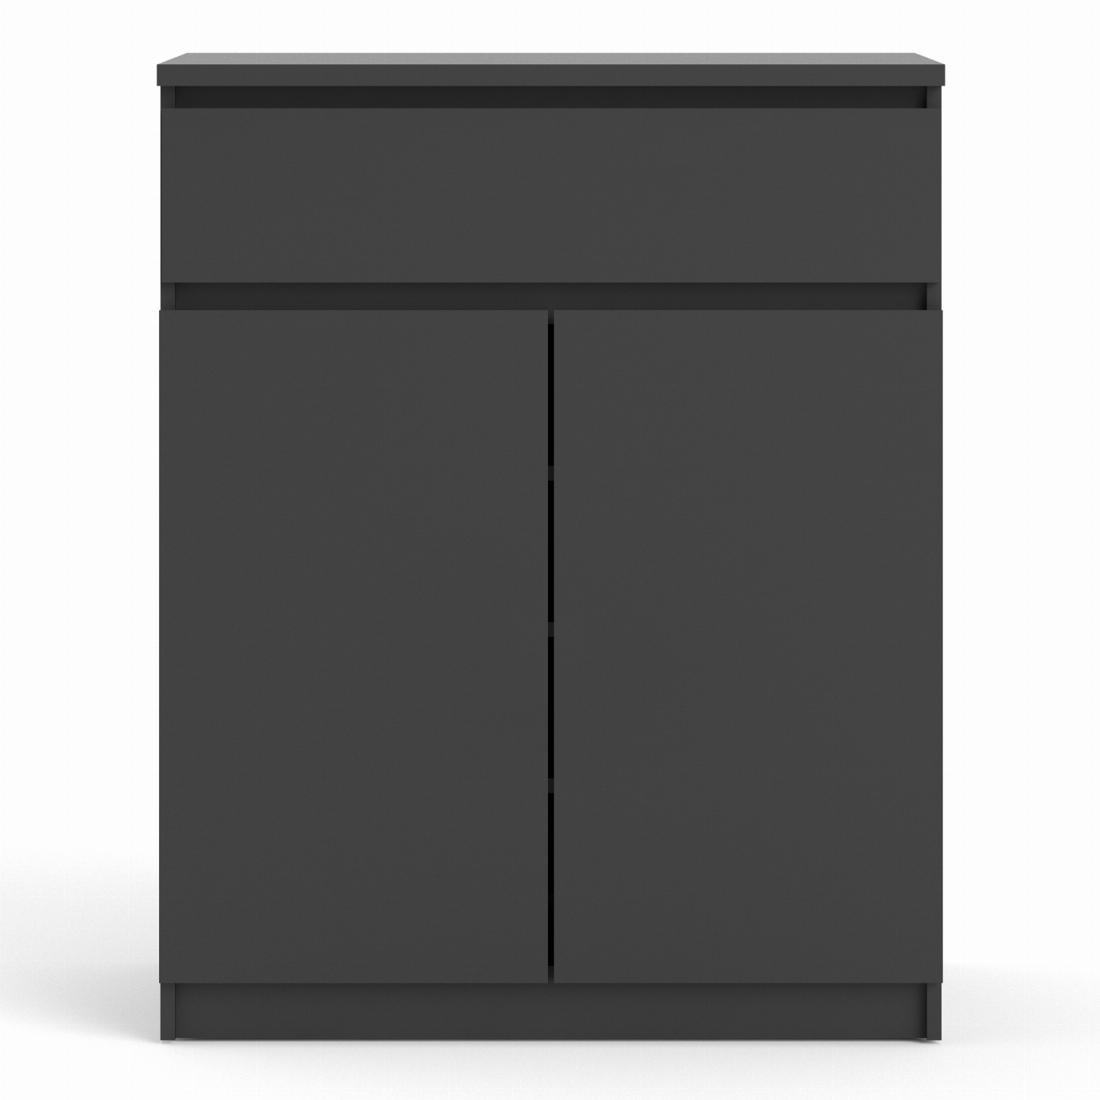 Naia Sideboard 1 Drawer 2 Doors in Black Matt